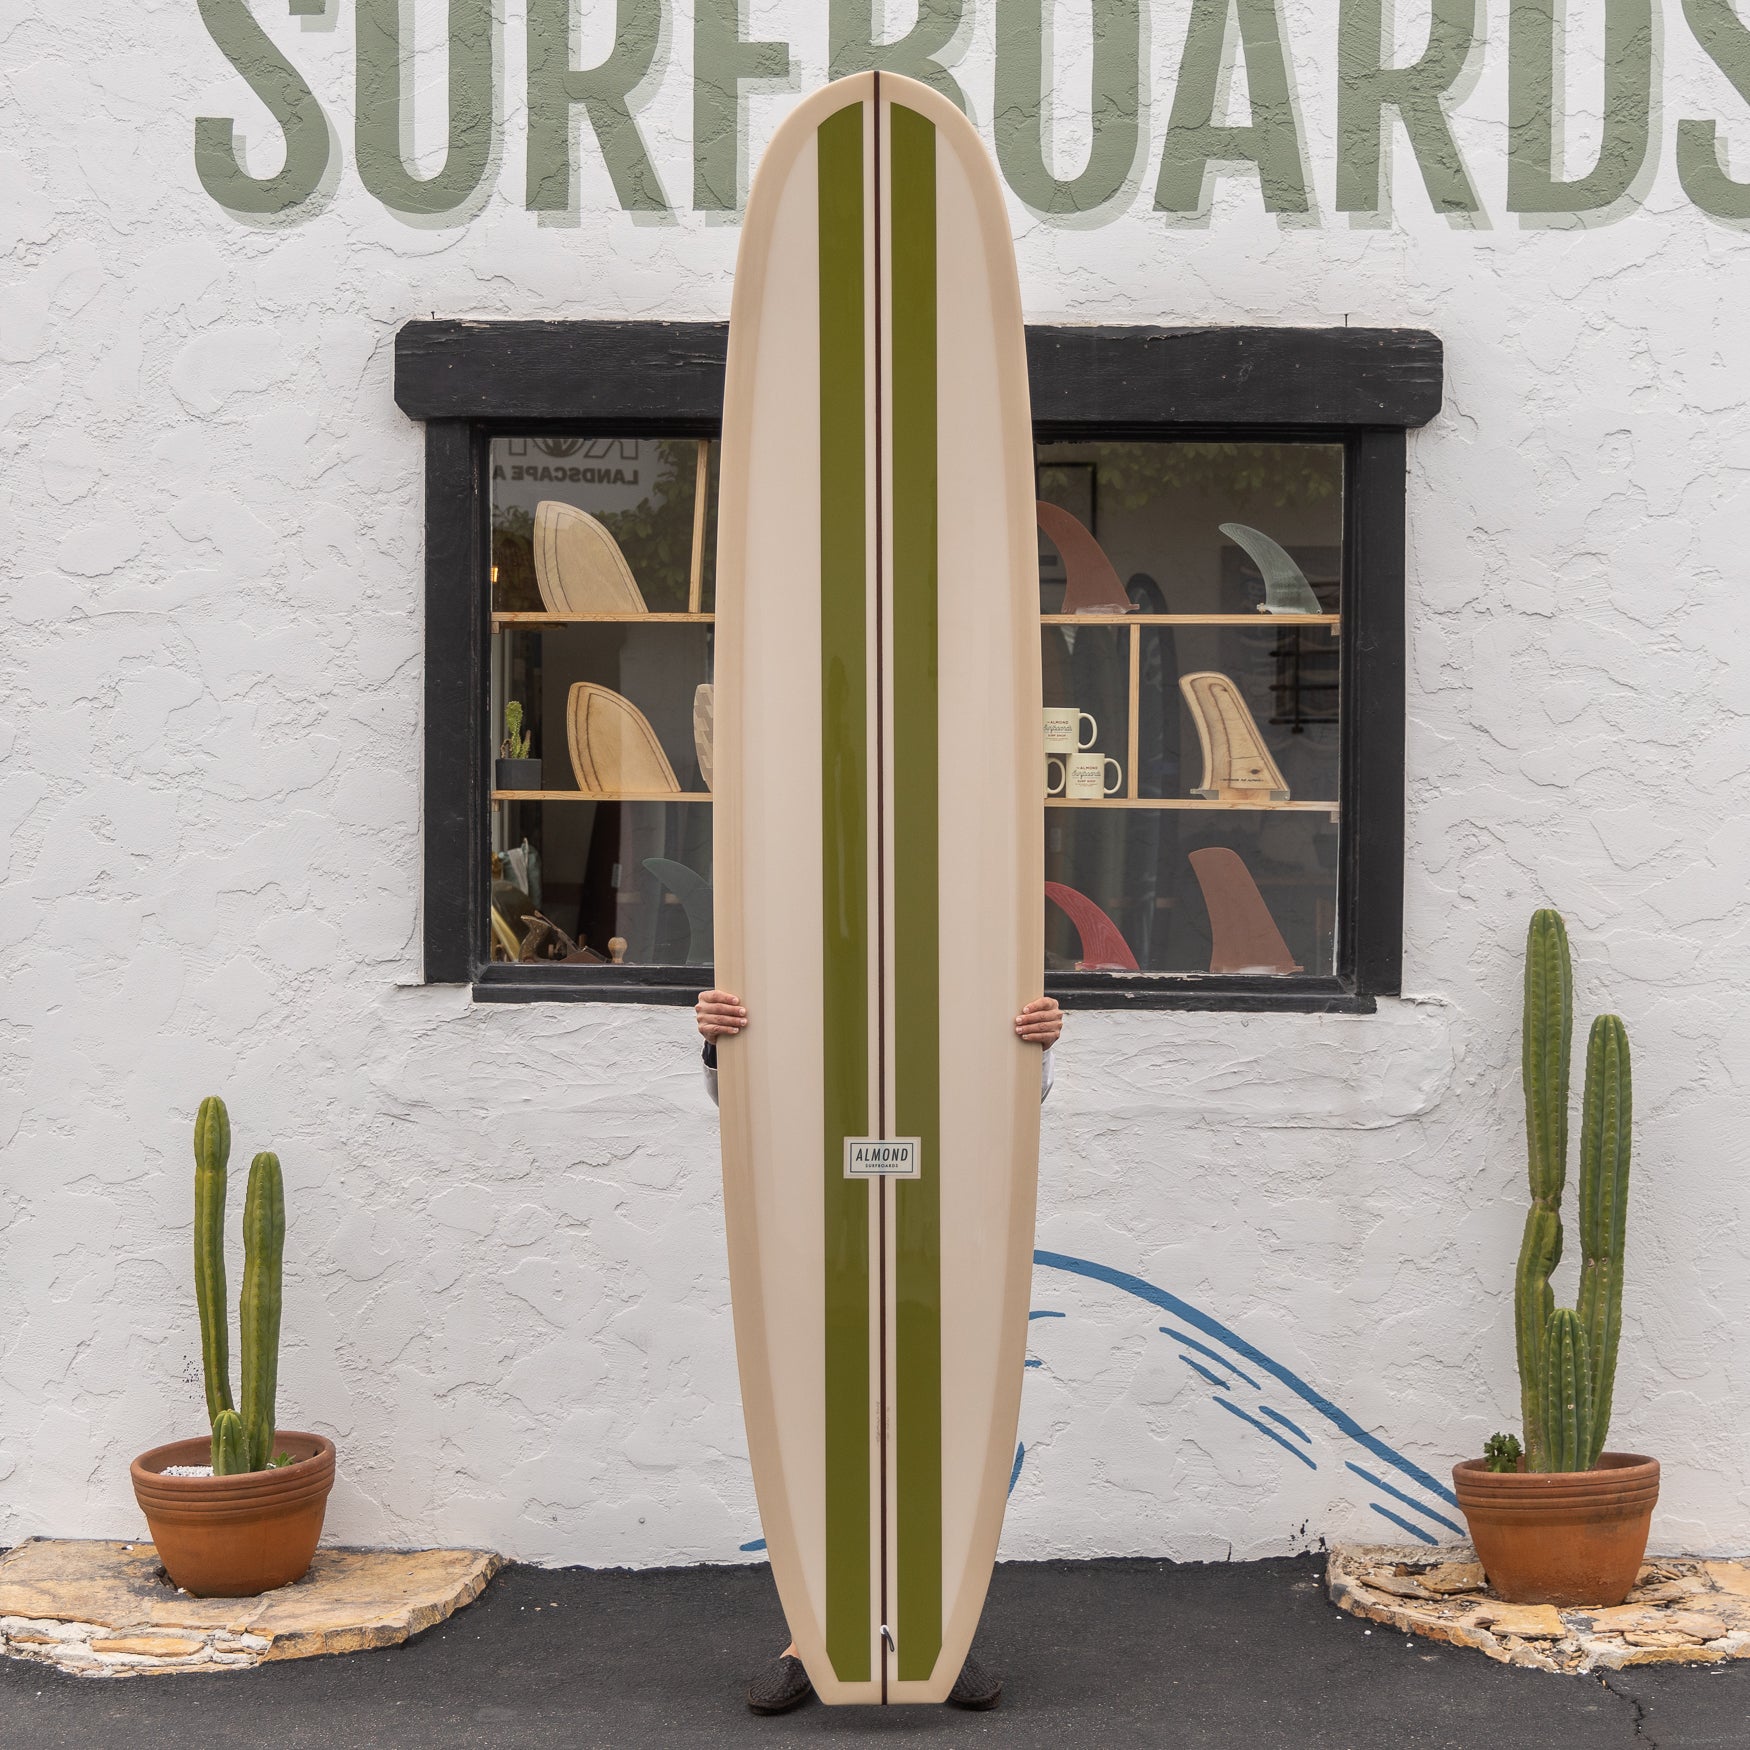 Almond Surfboards